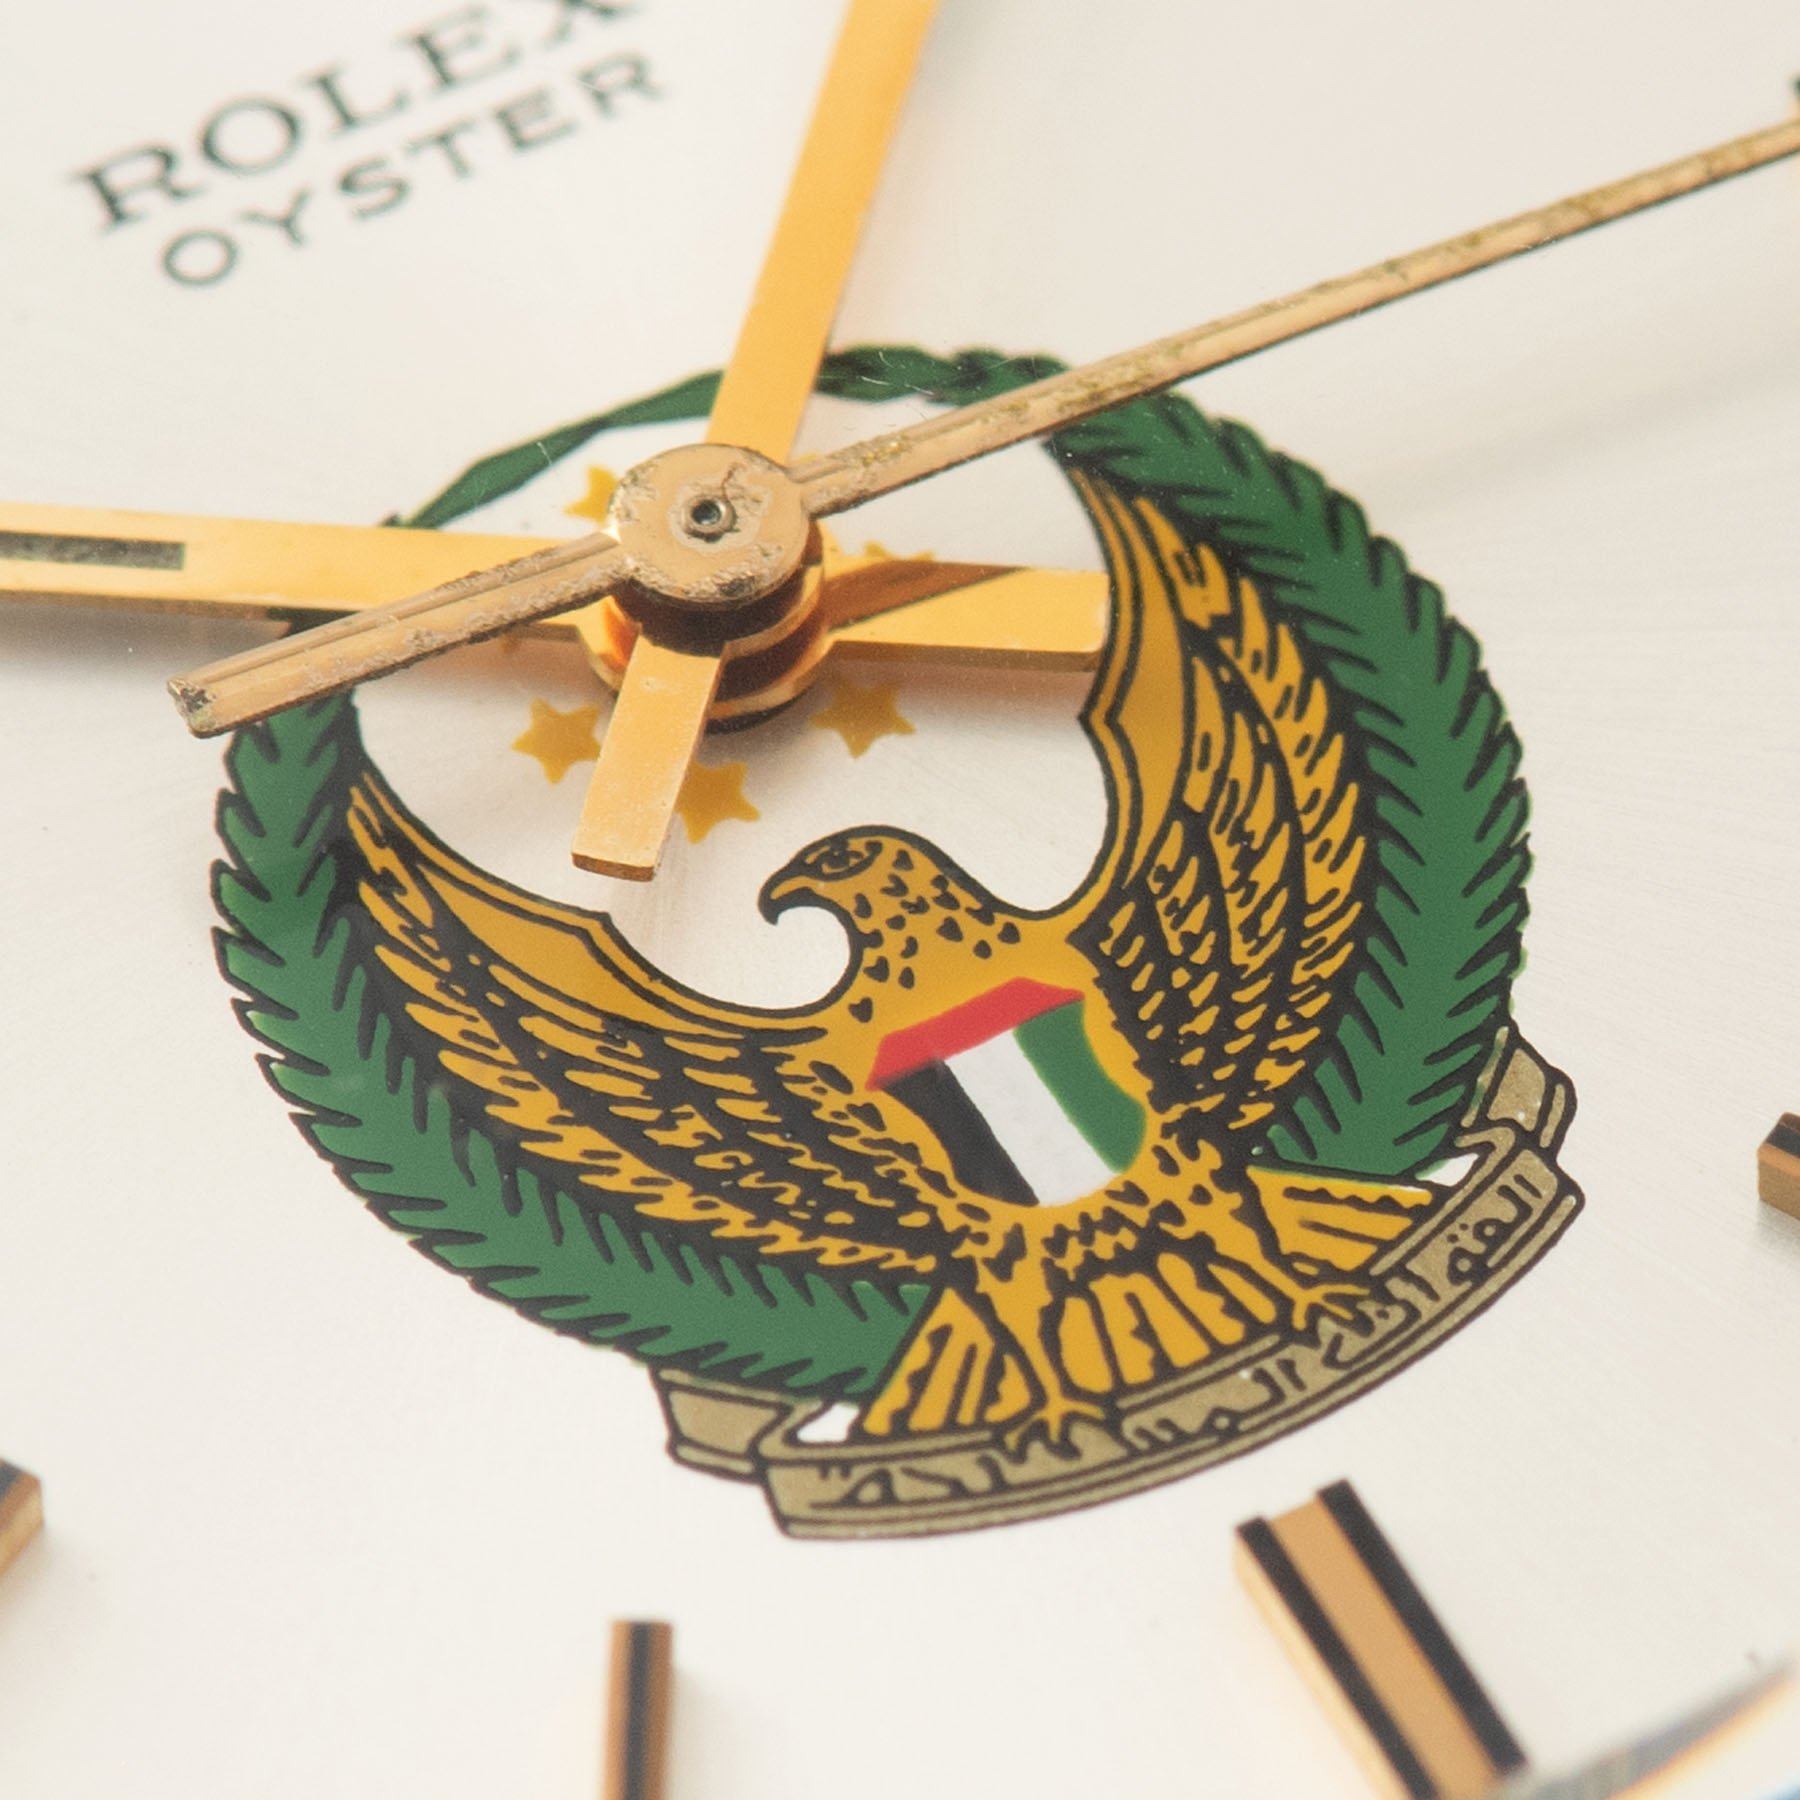 Rolex Oyster UAE Eagle dial